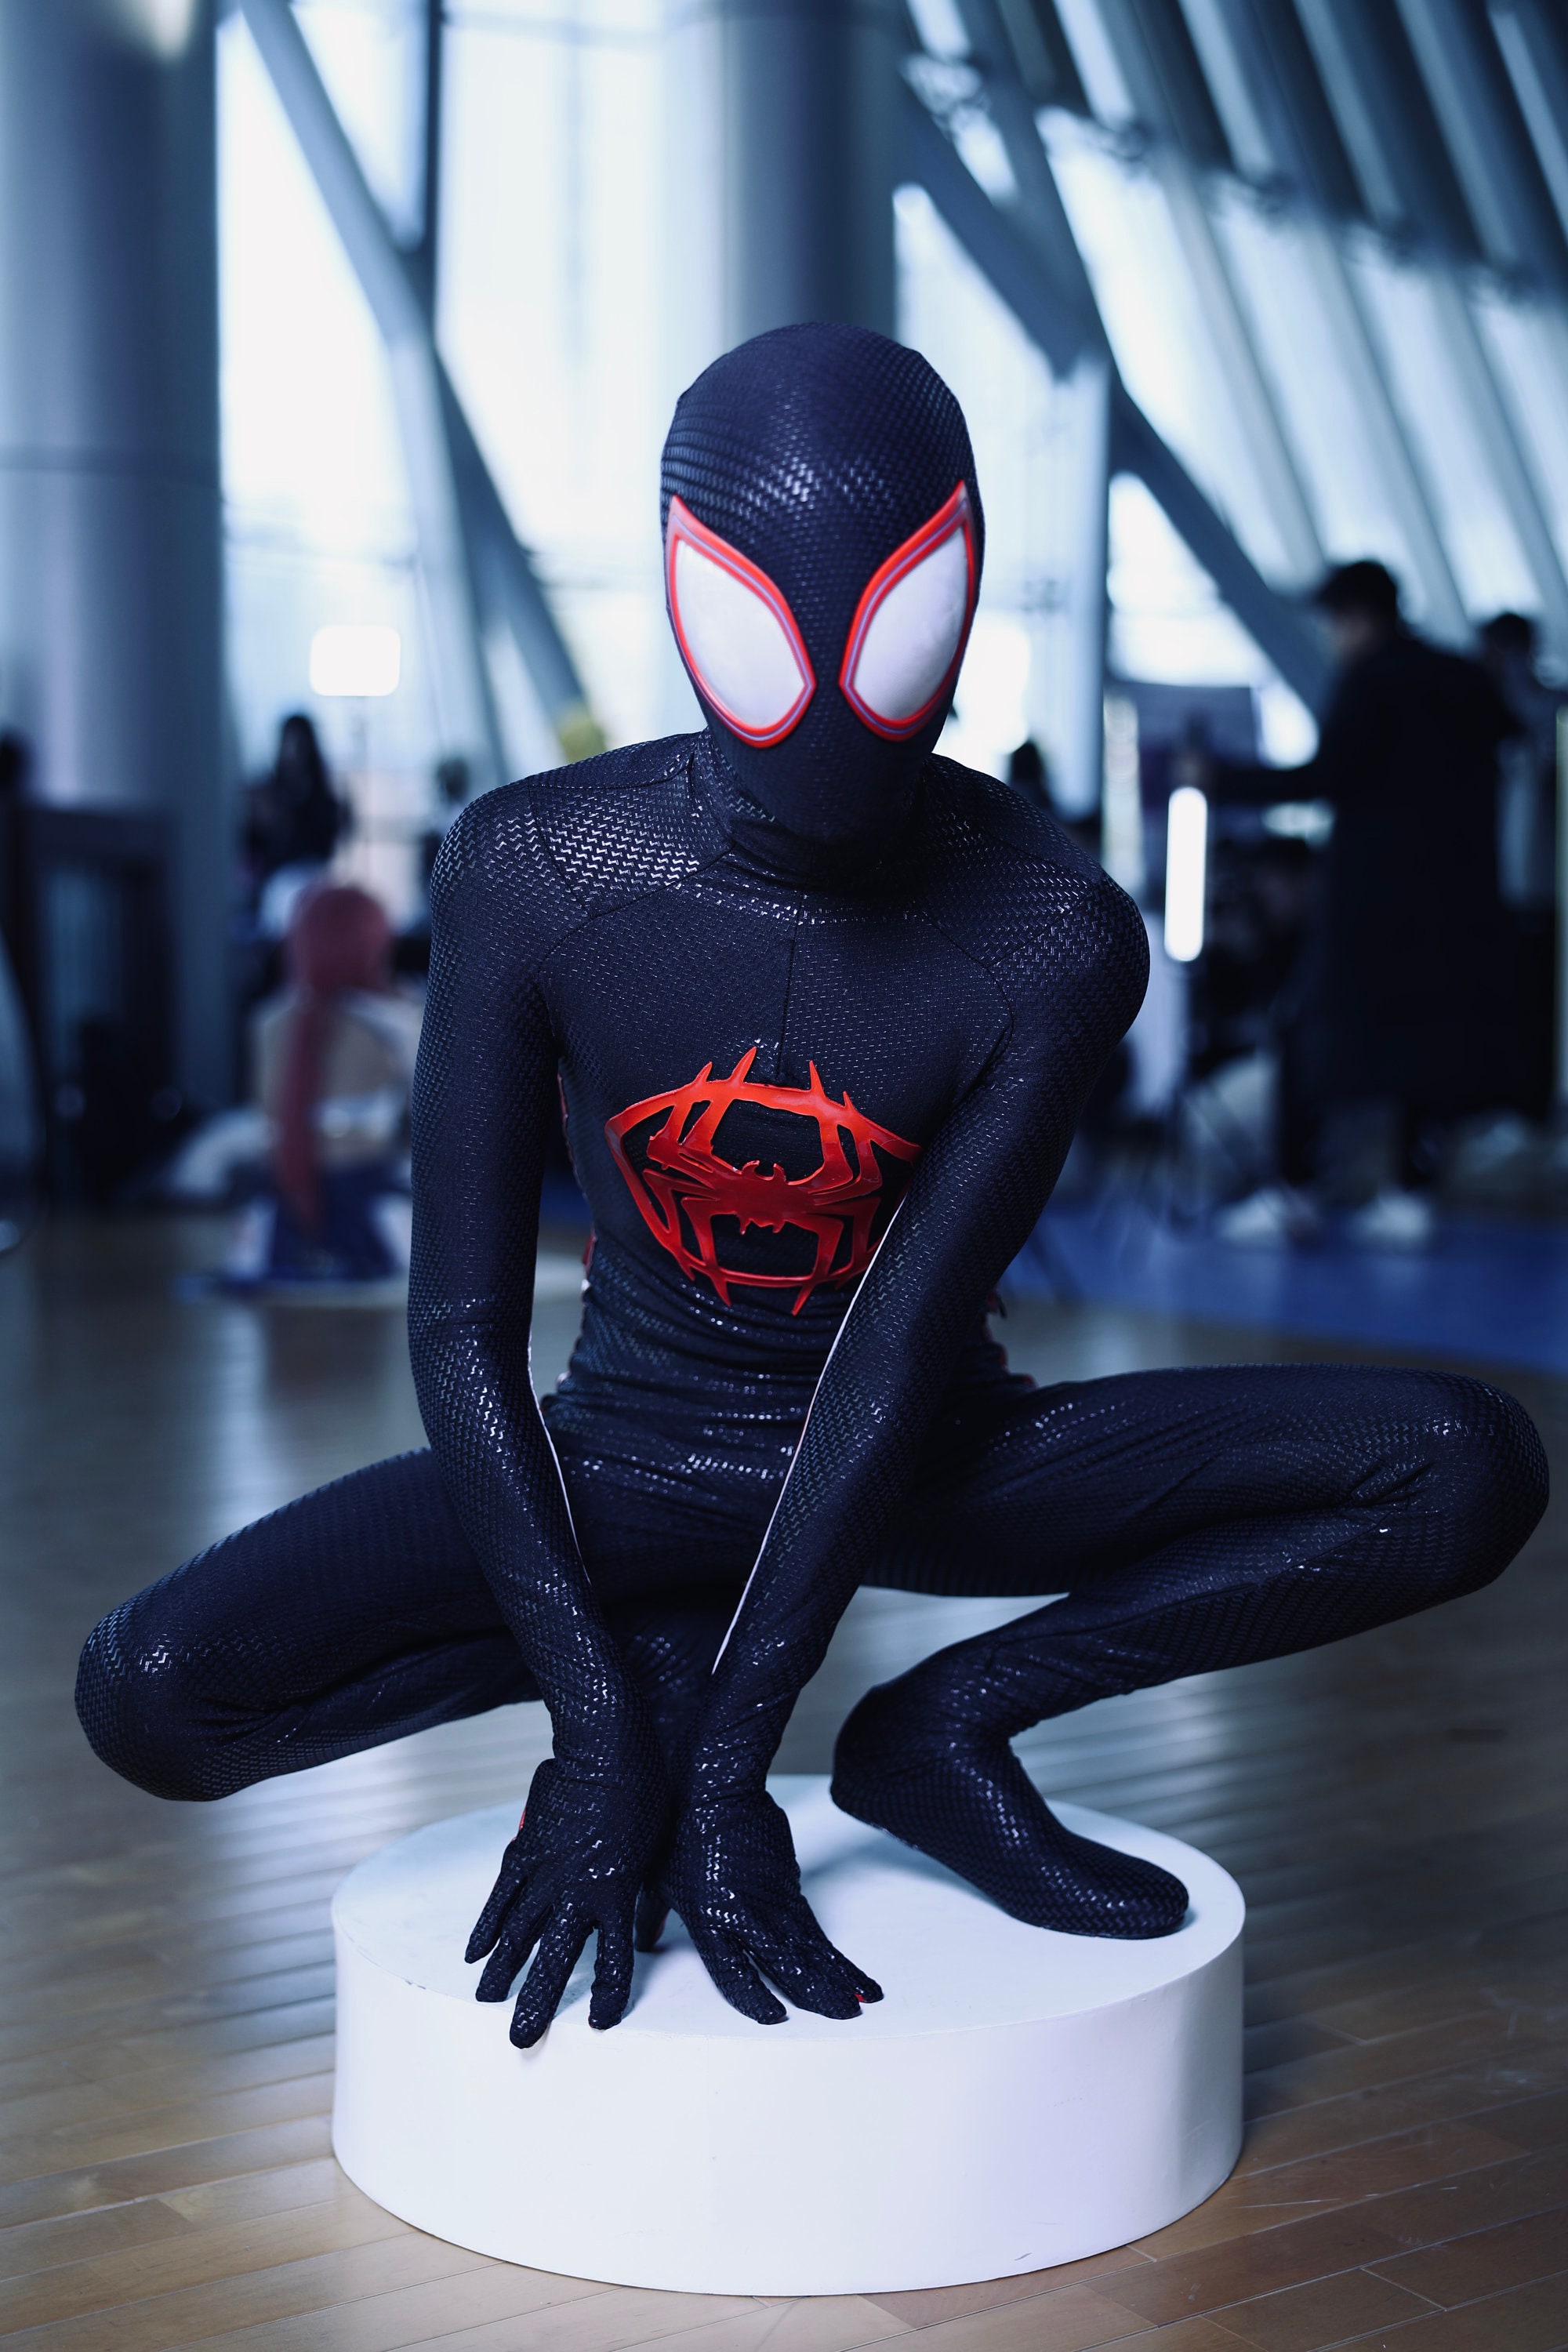 PS5 Miles Morales Spiderman Cosplay Costume Spider-man Spandex Bodysuit  Hallween